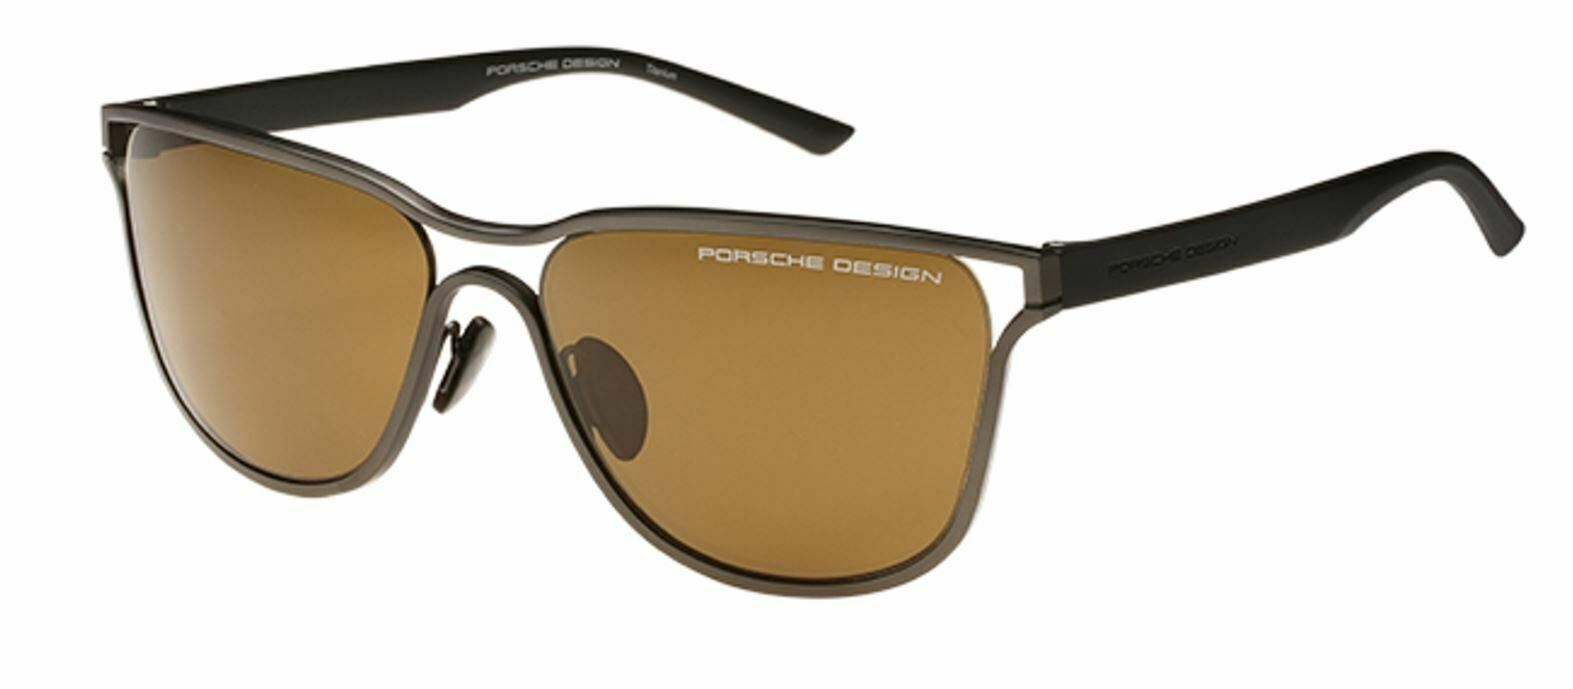 NEW Porsche Design P 8647 B Gun Sunglasses